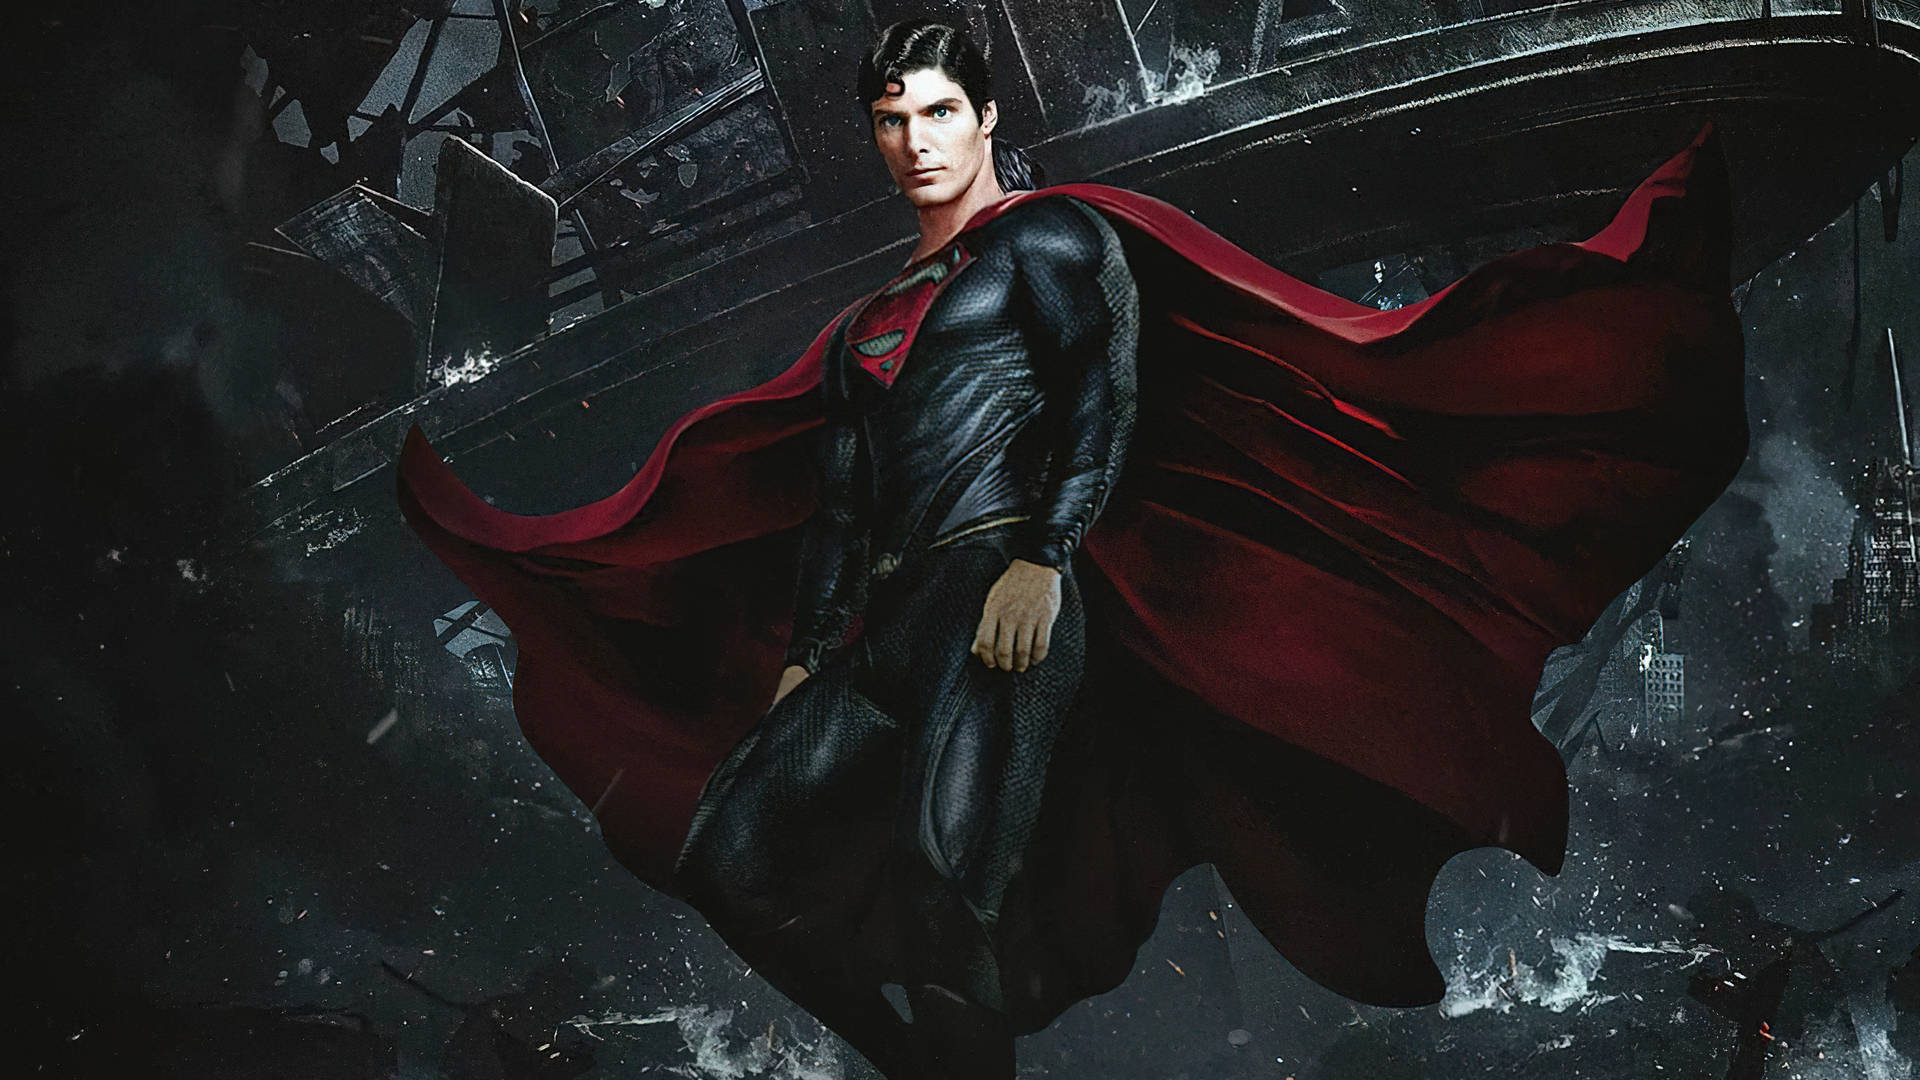 Christopher Reeve Man Of Steel Film Poster